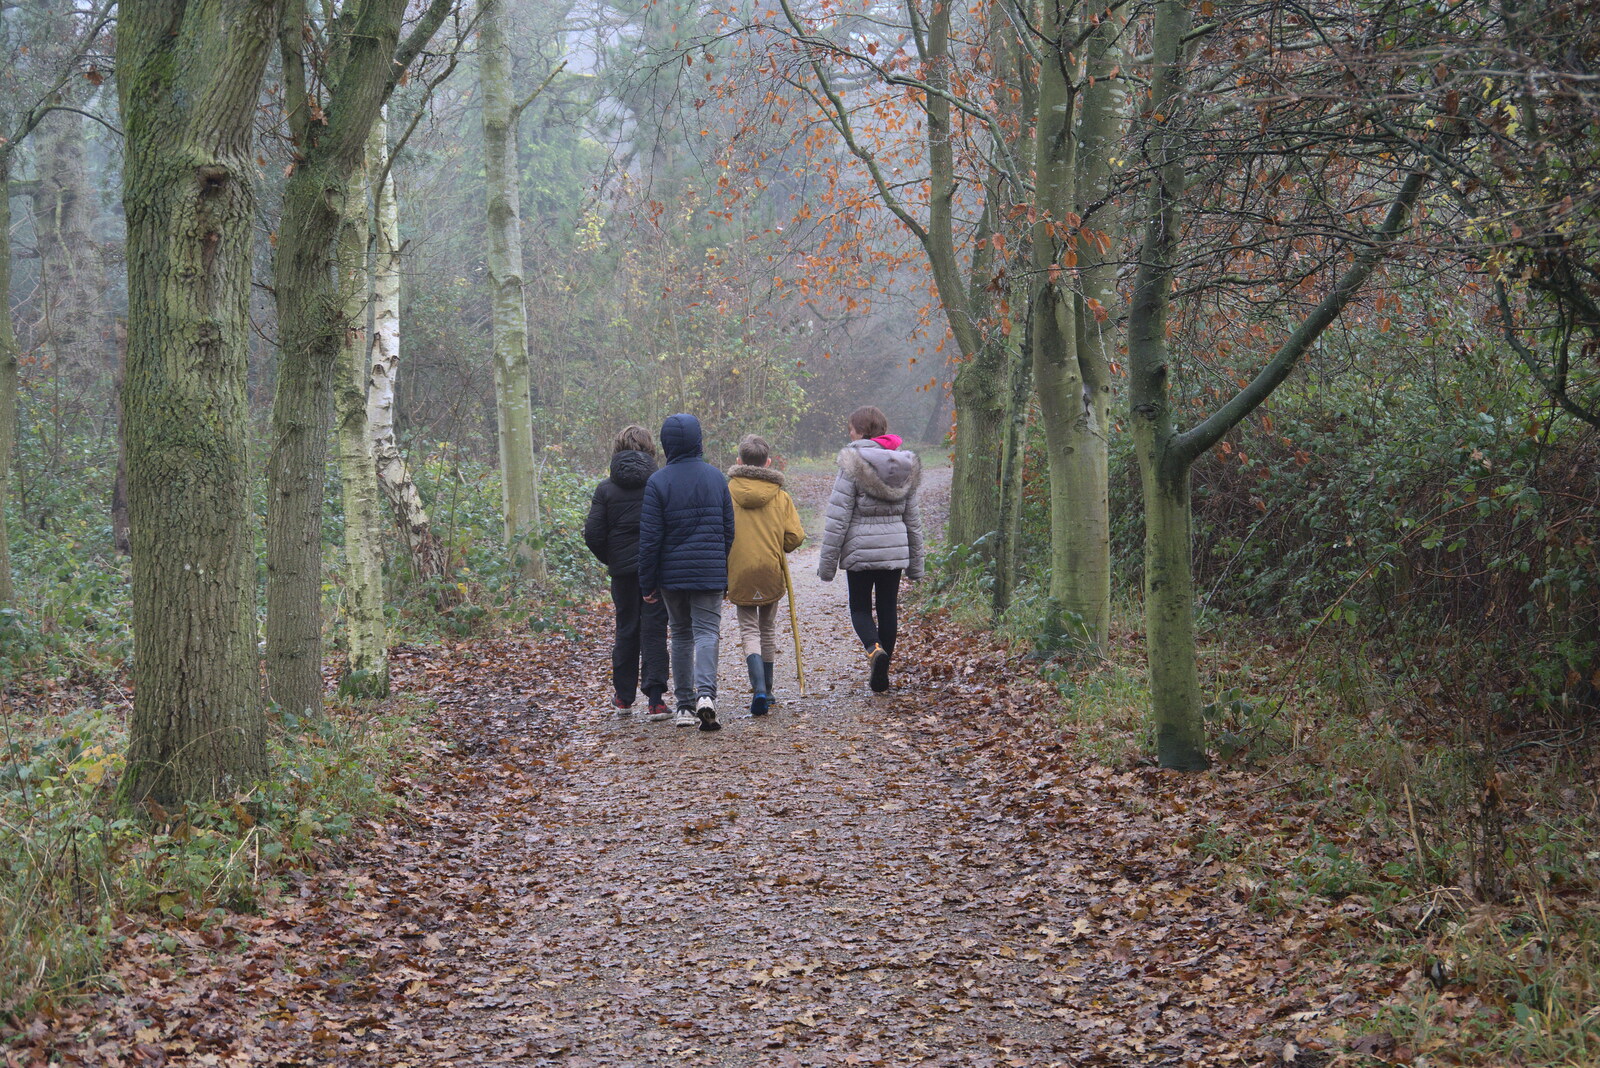 We head off through the woods from A Return to Thornham Walks, Thornham, Suffolk - 19th December 2021